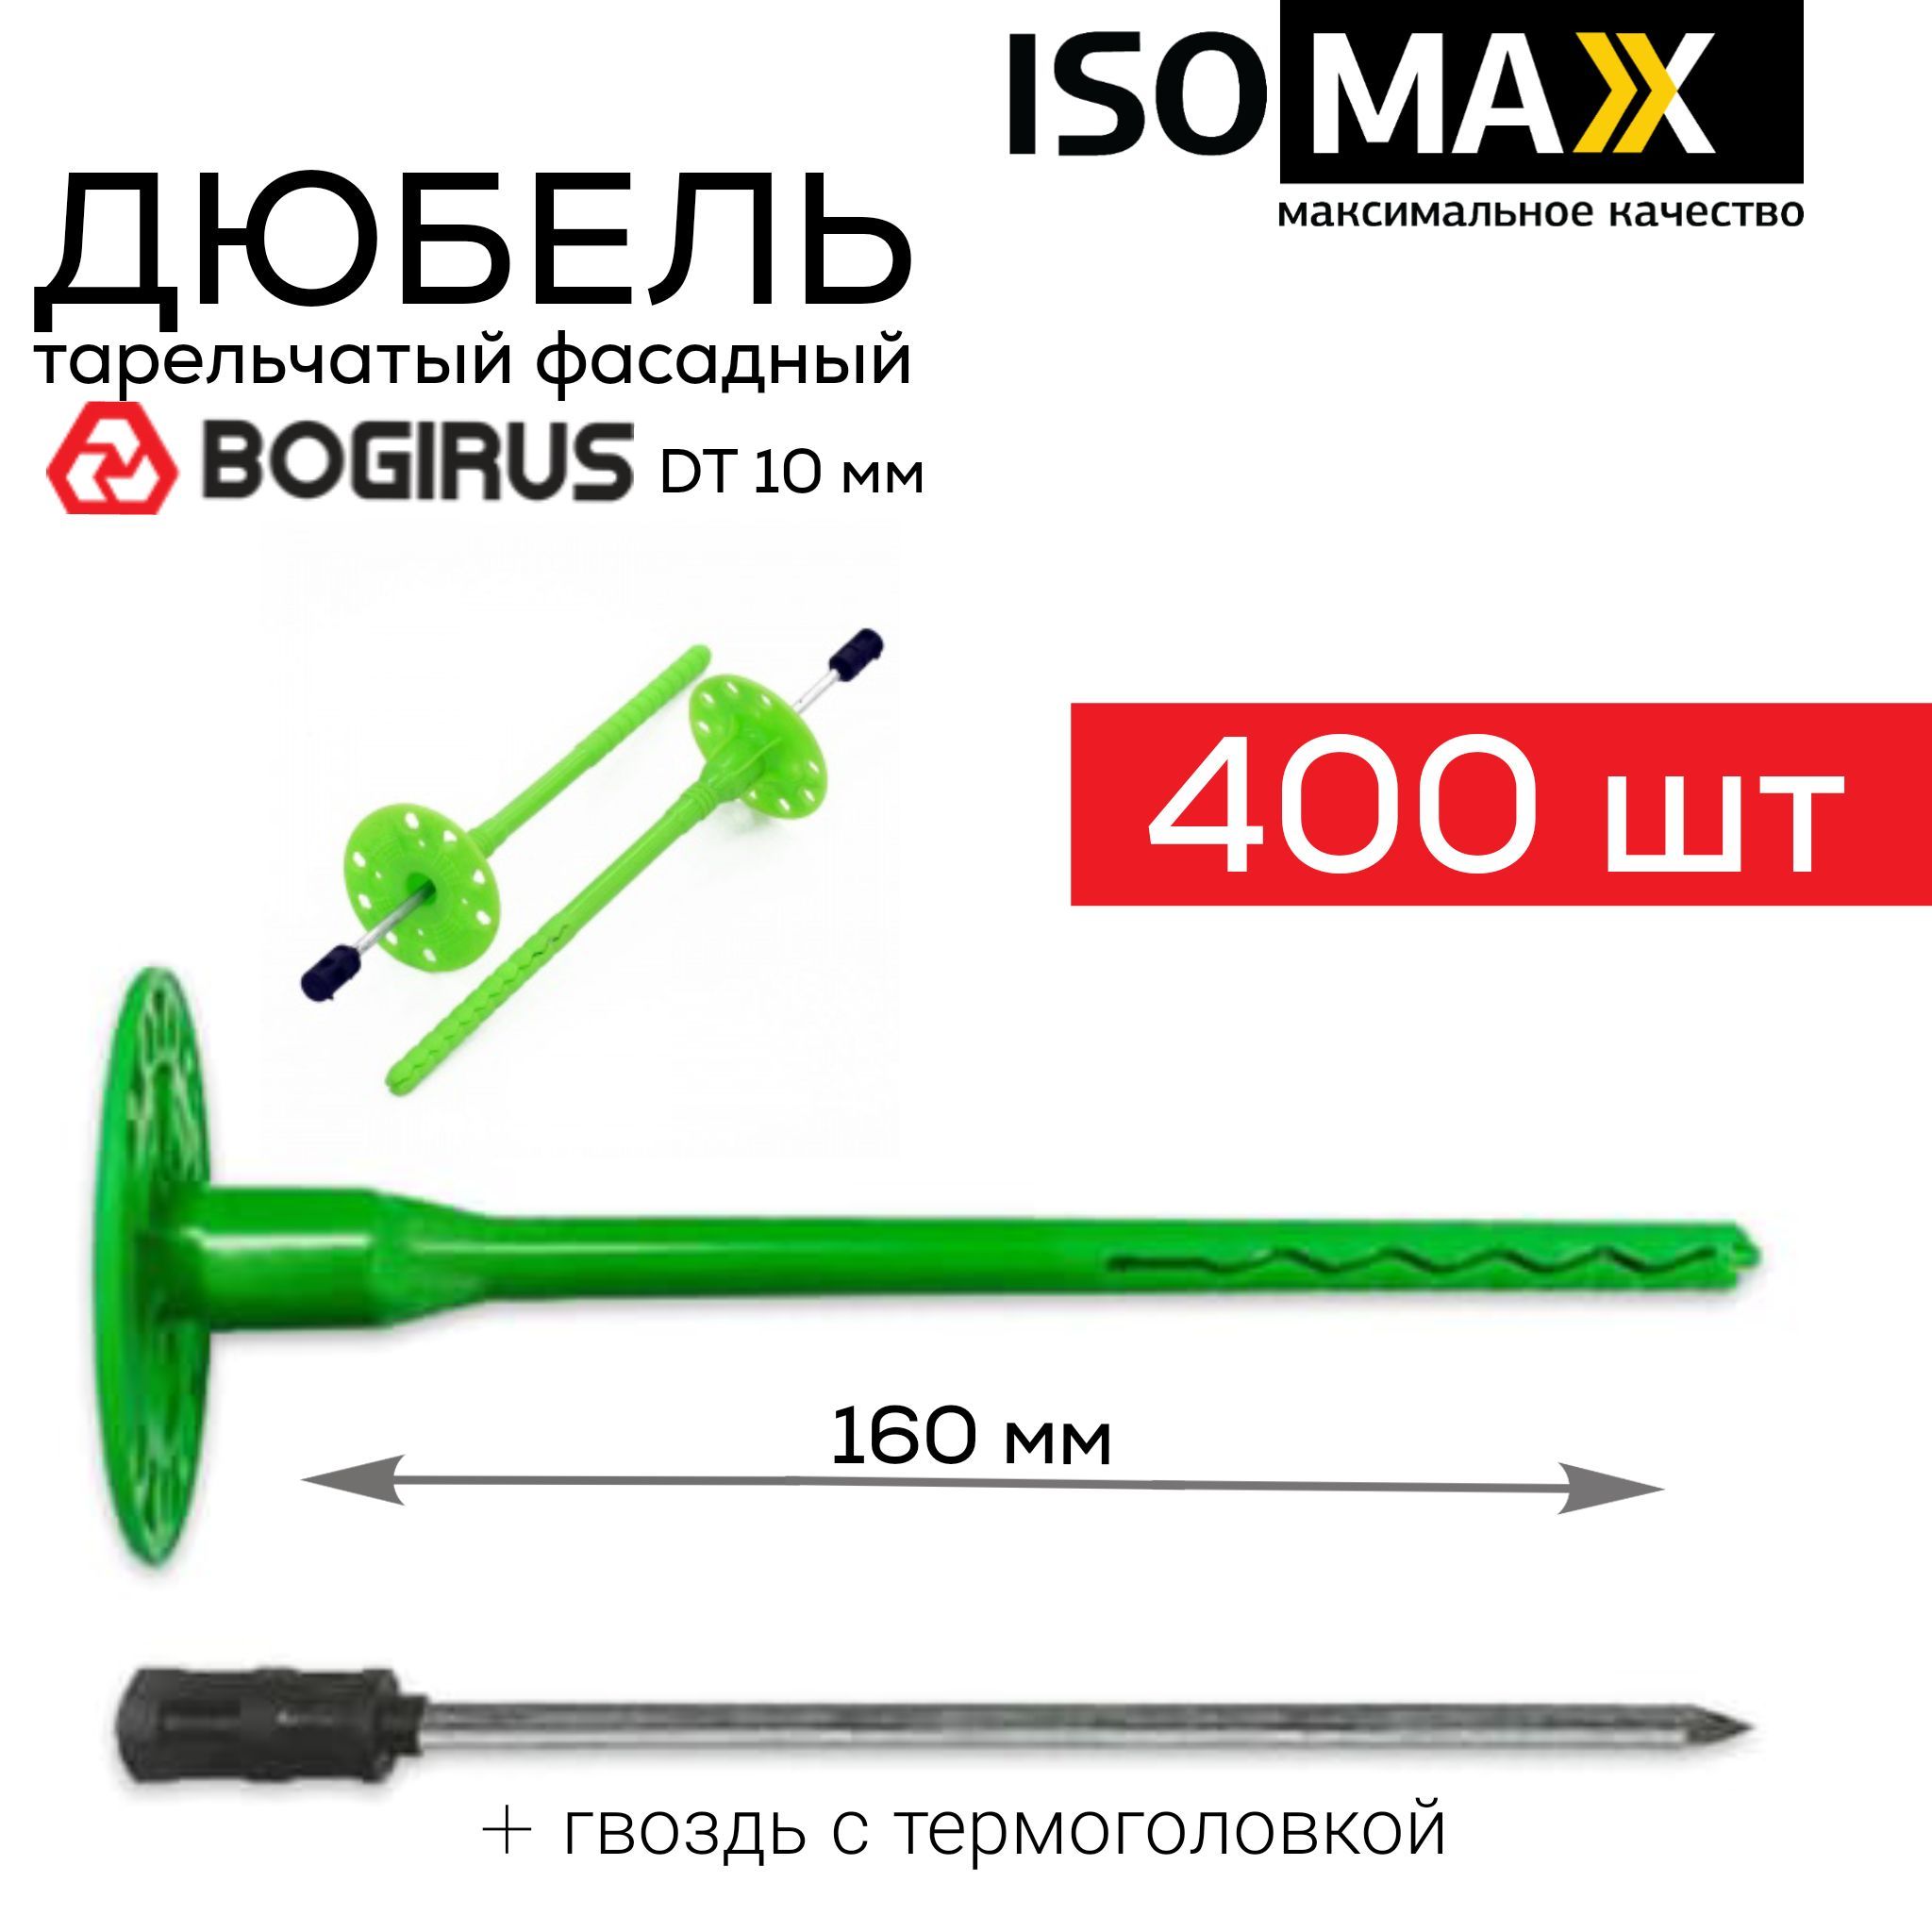 Дюбель для теплоизоляции 160мм Isomax Bogirus DT10 160 мм, 400 шт, для фасада